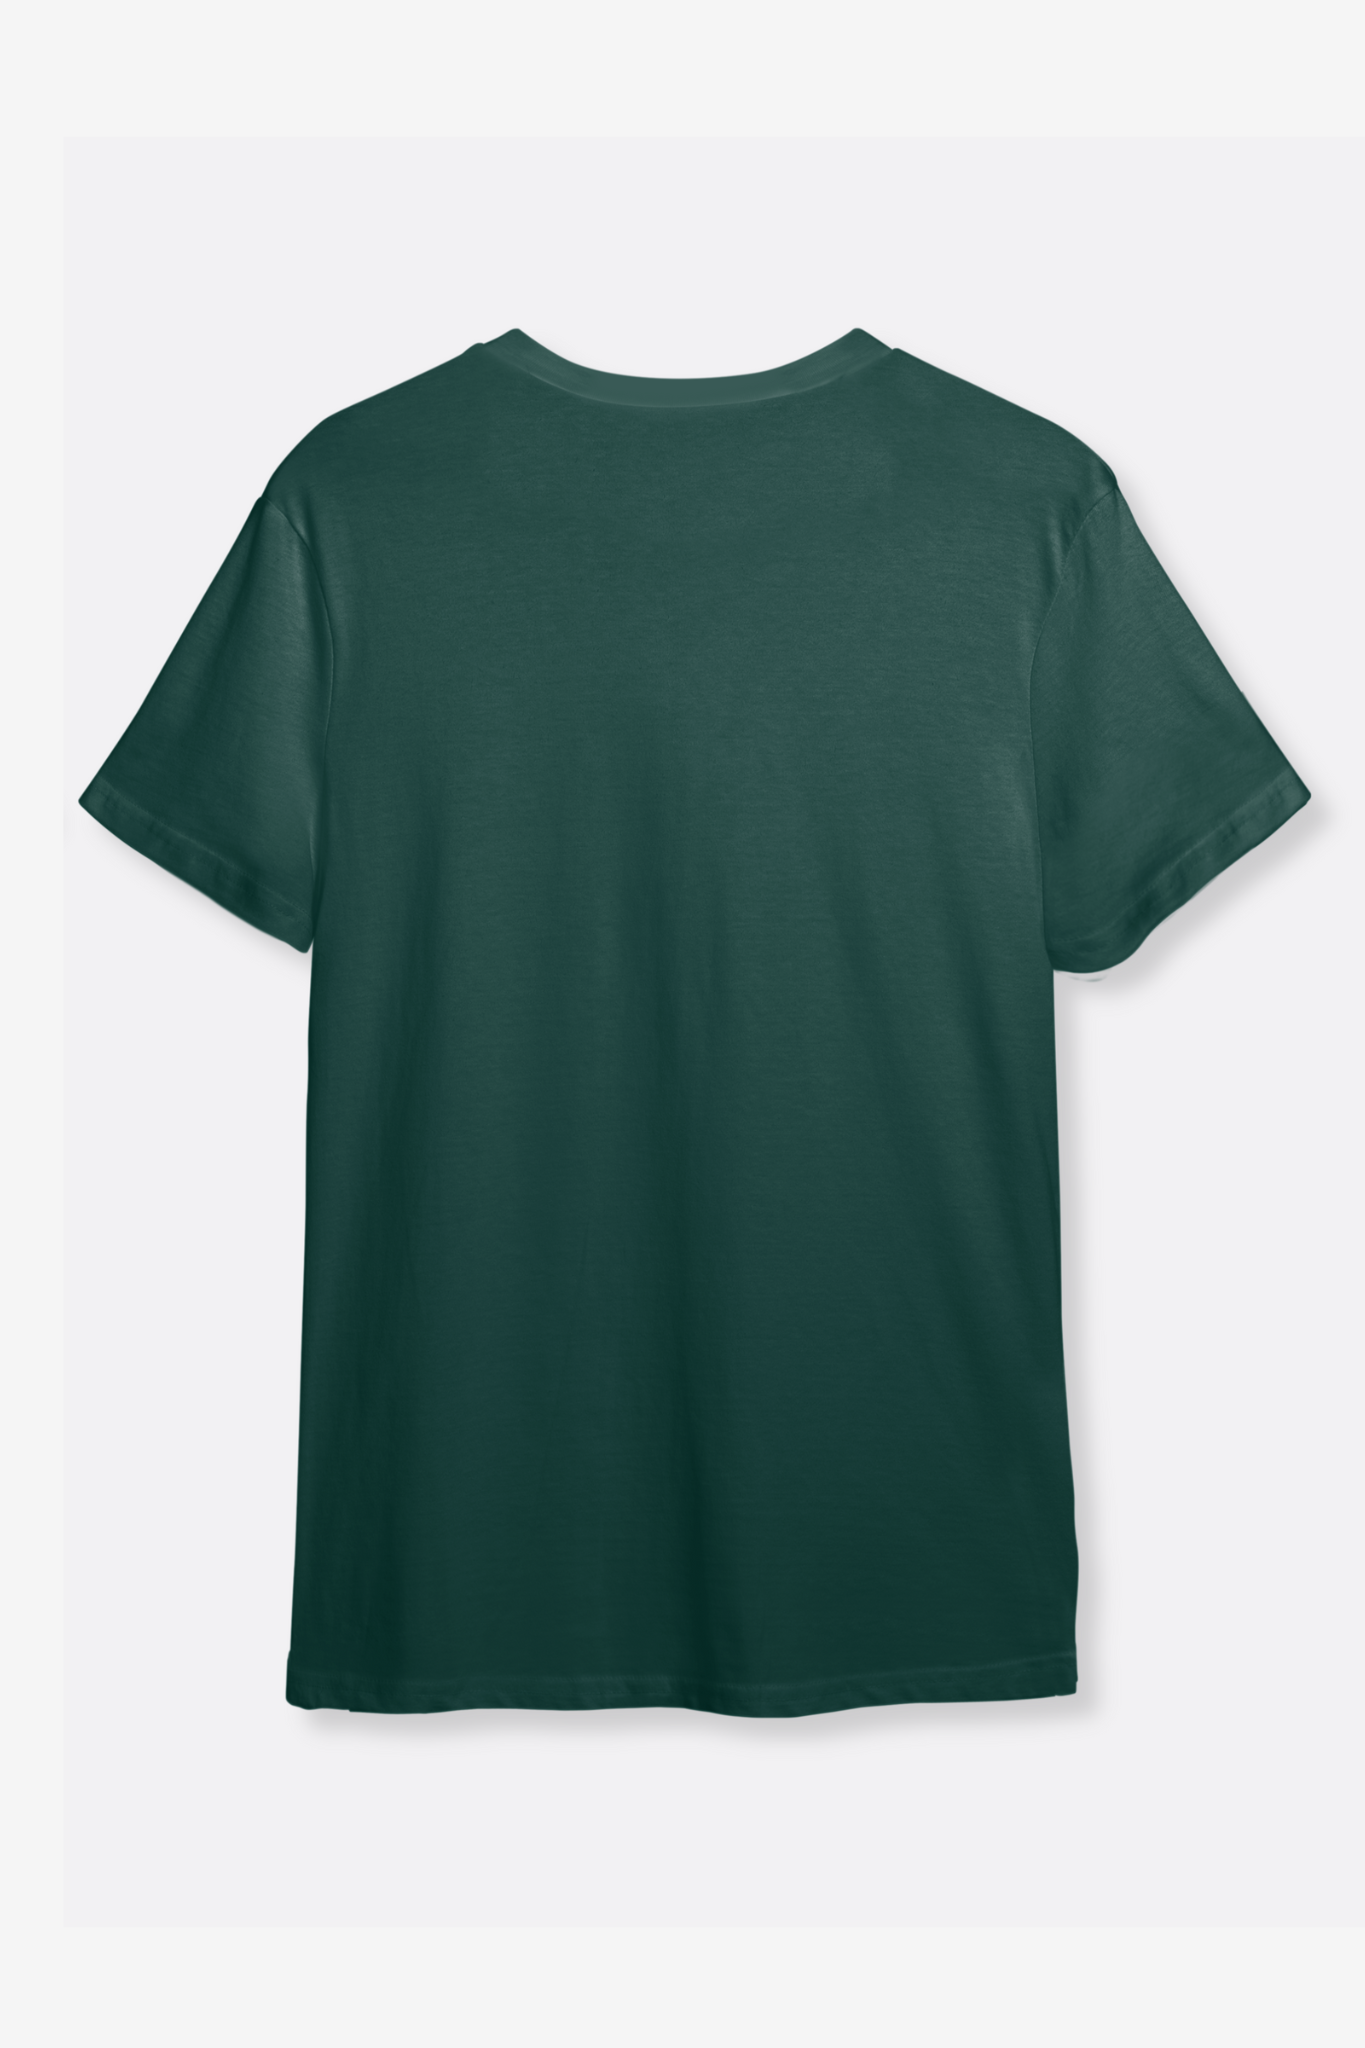 Def Leppard High n' Dry 1981 Green T-Shirt